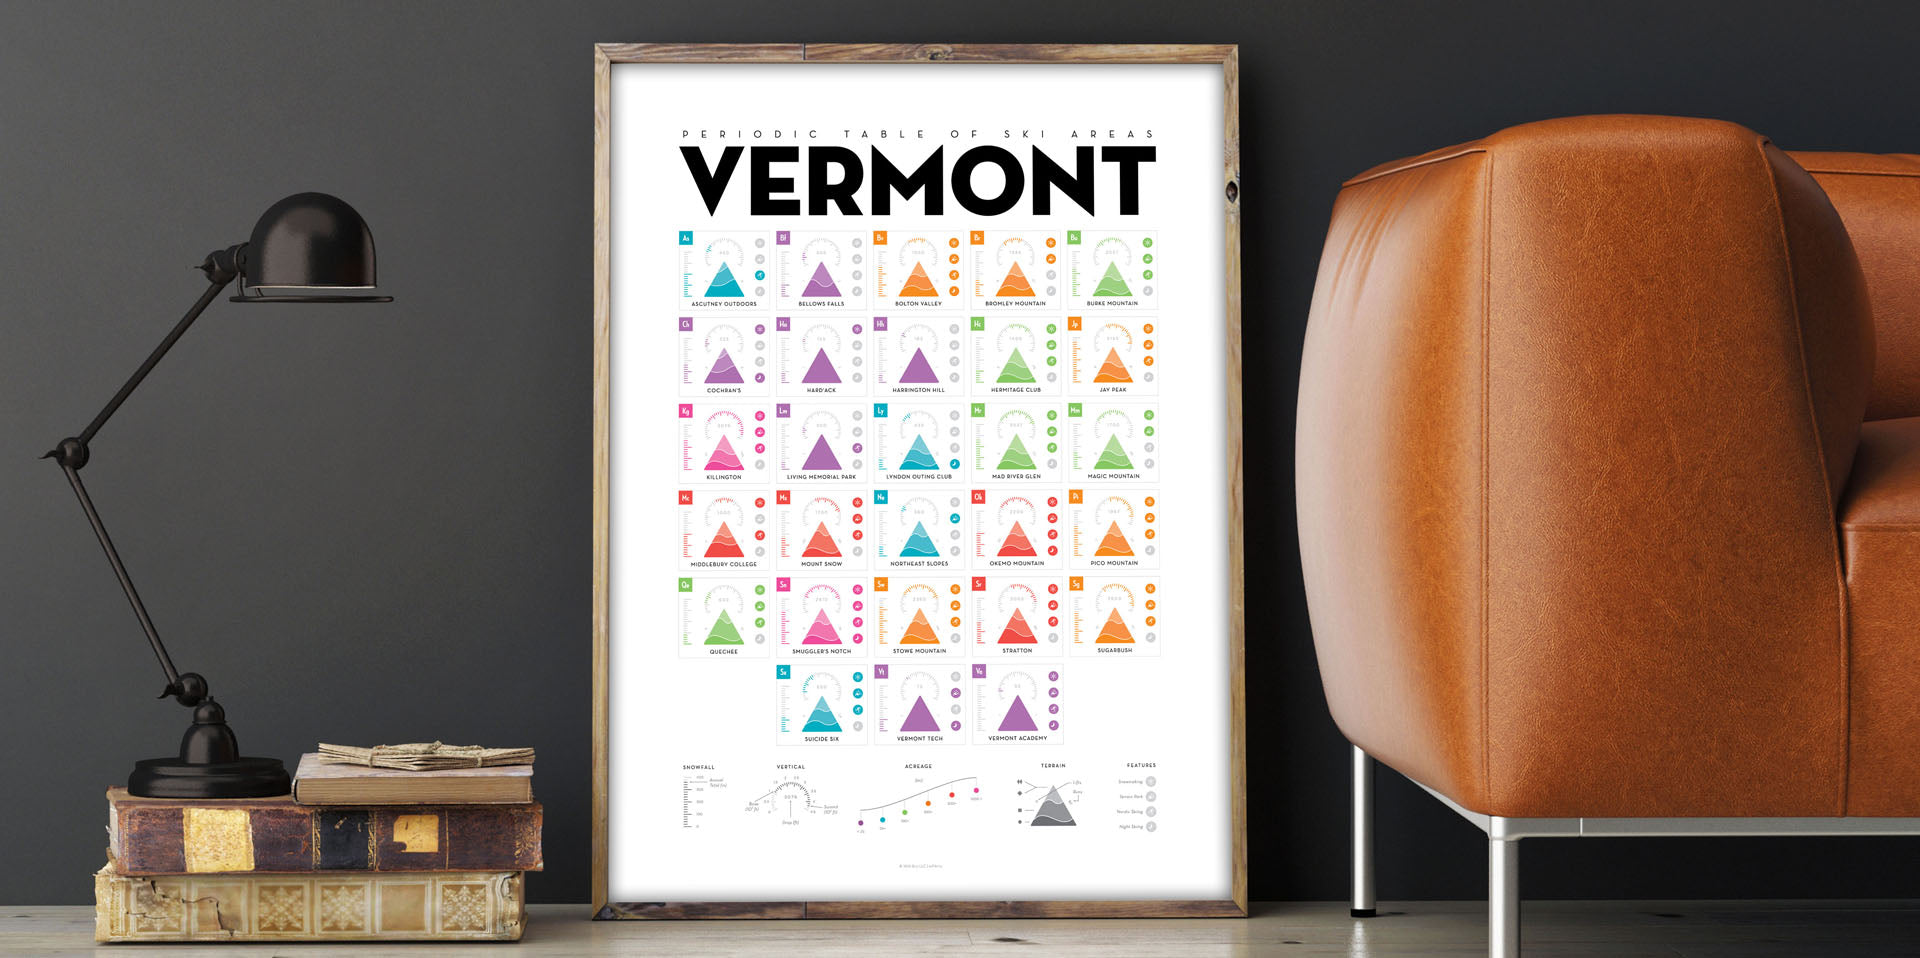 Periodic Table of Ski Areas: Vermont